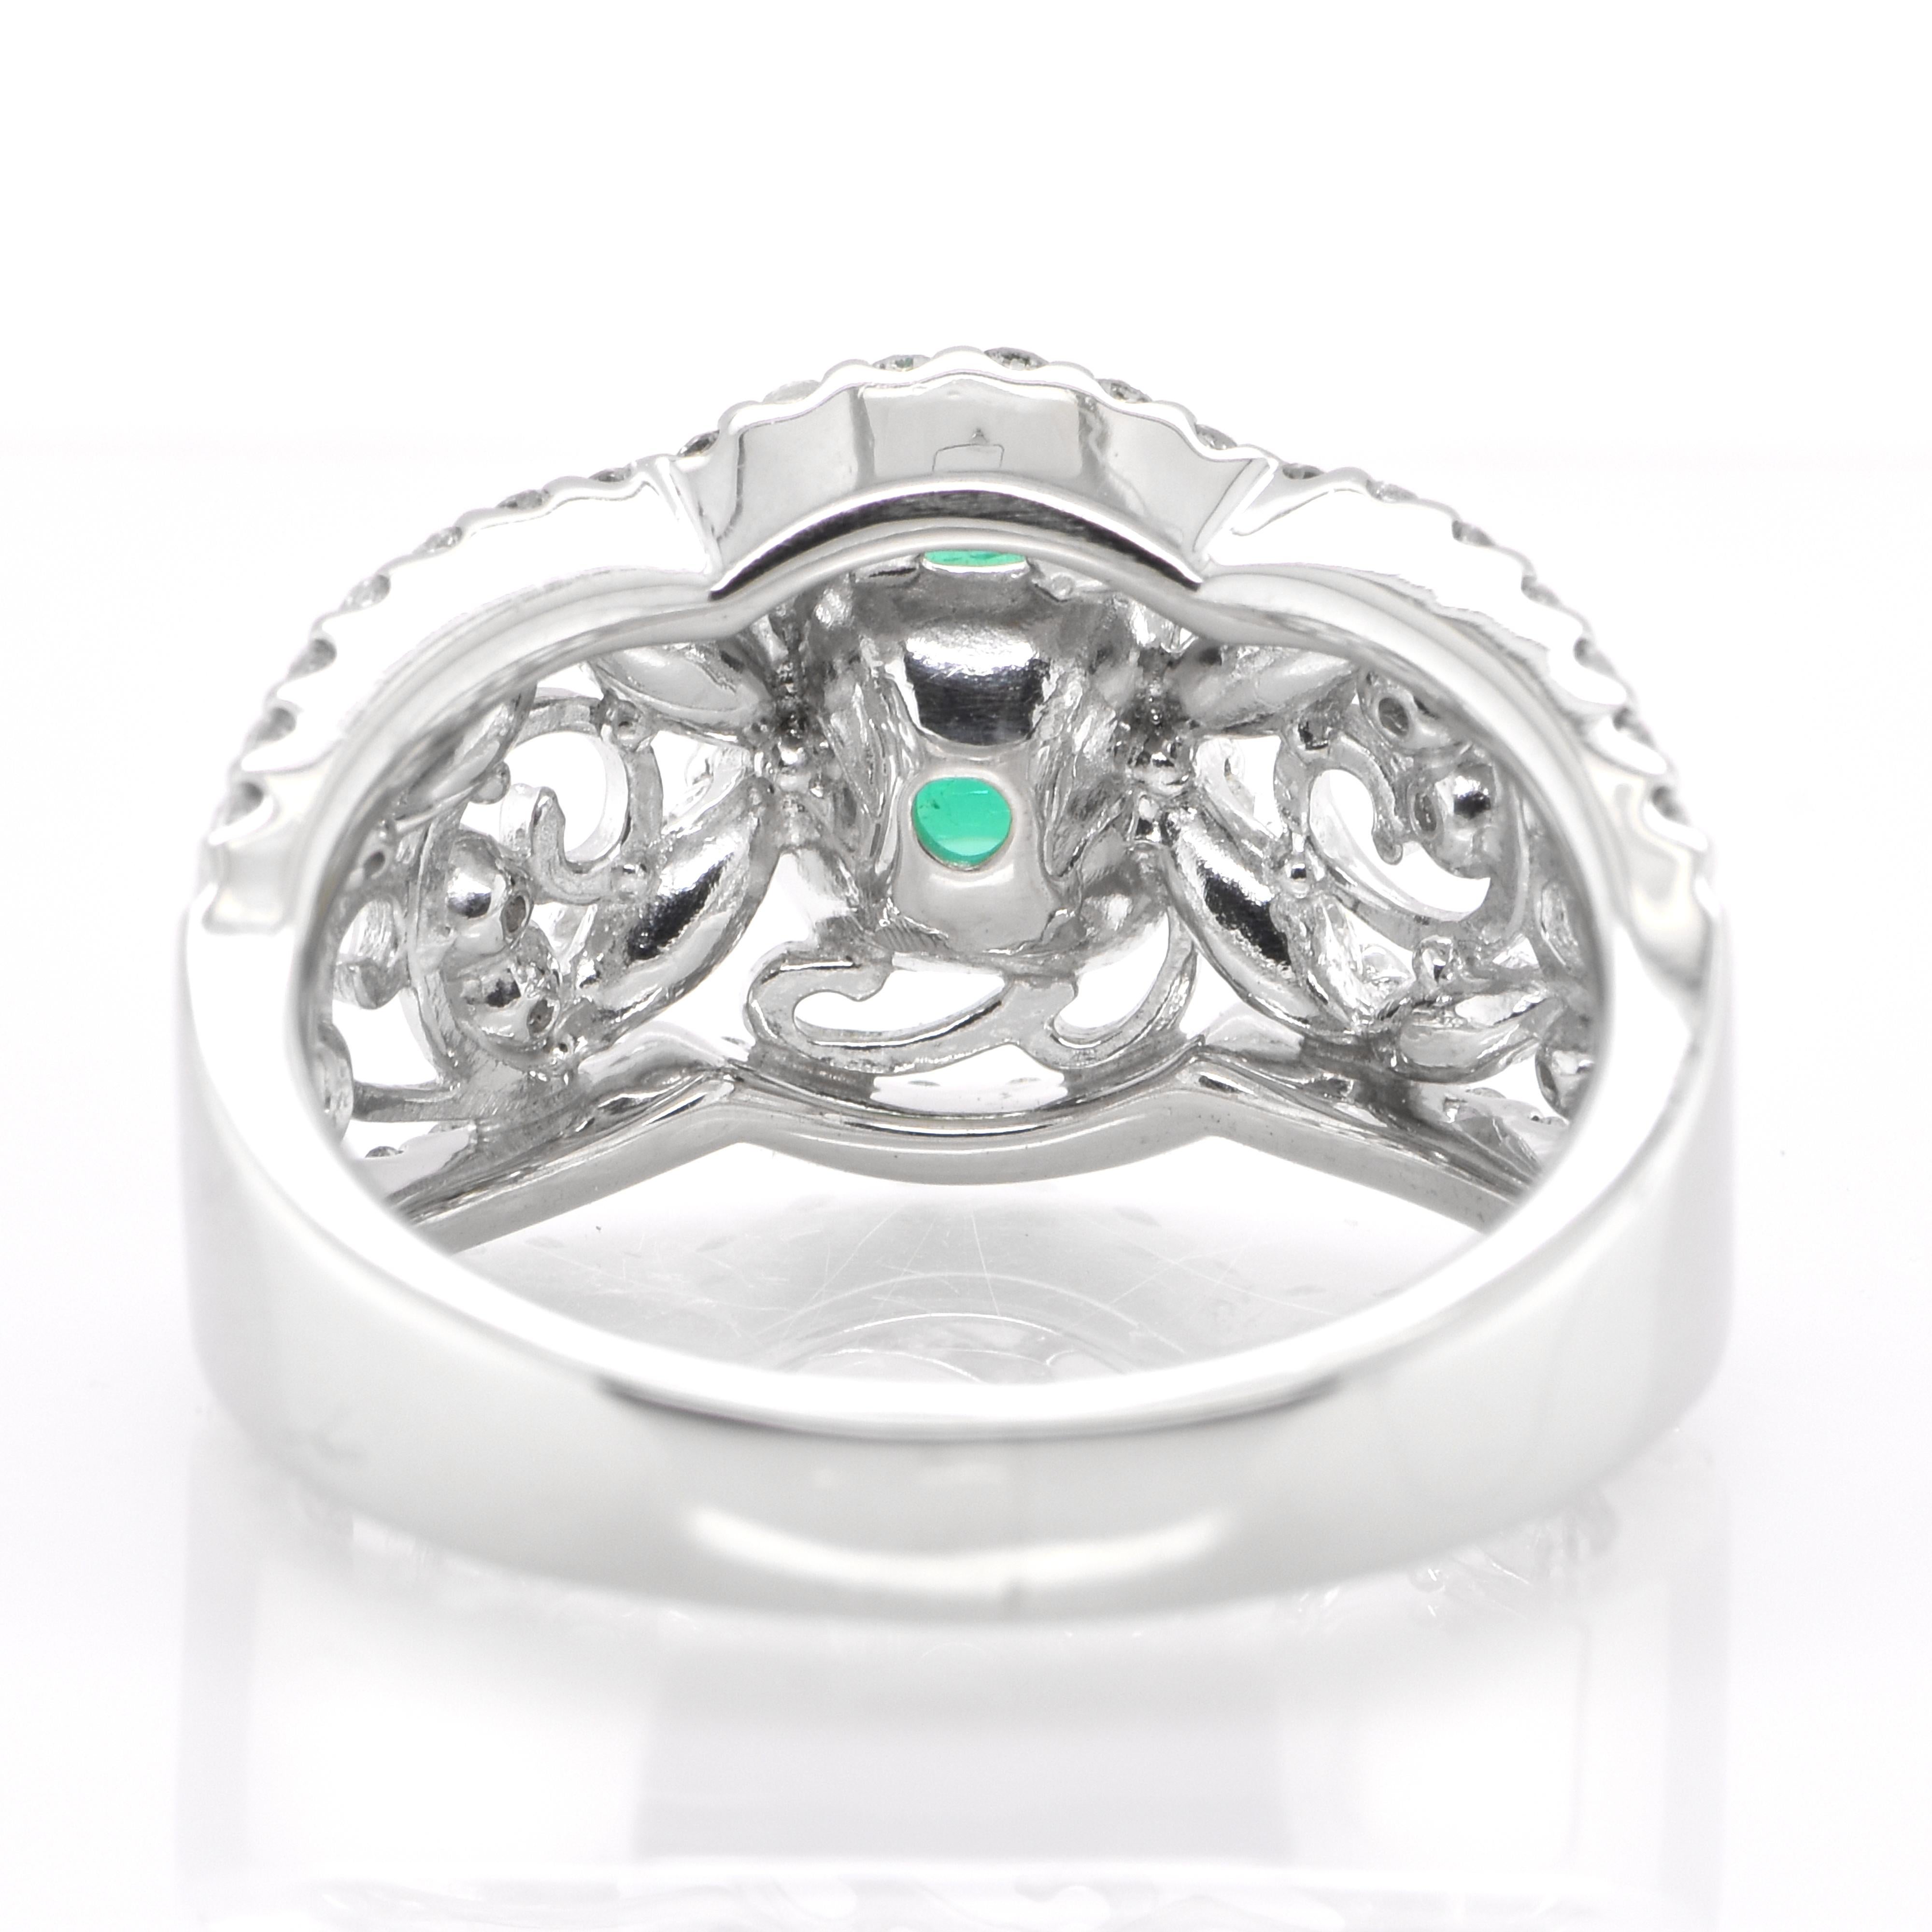 Women's 0.86 Carat Natural Vivid Green Emerald and Diamond Ring Set in Platinum